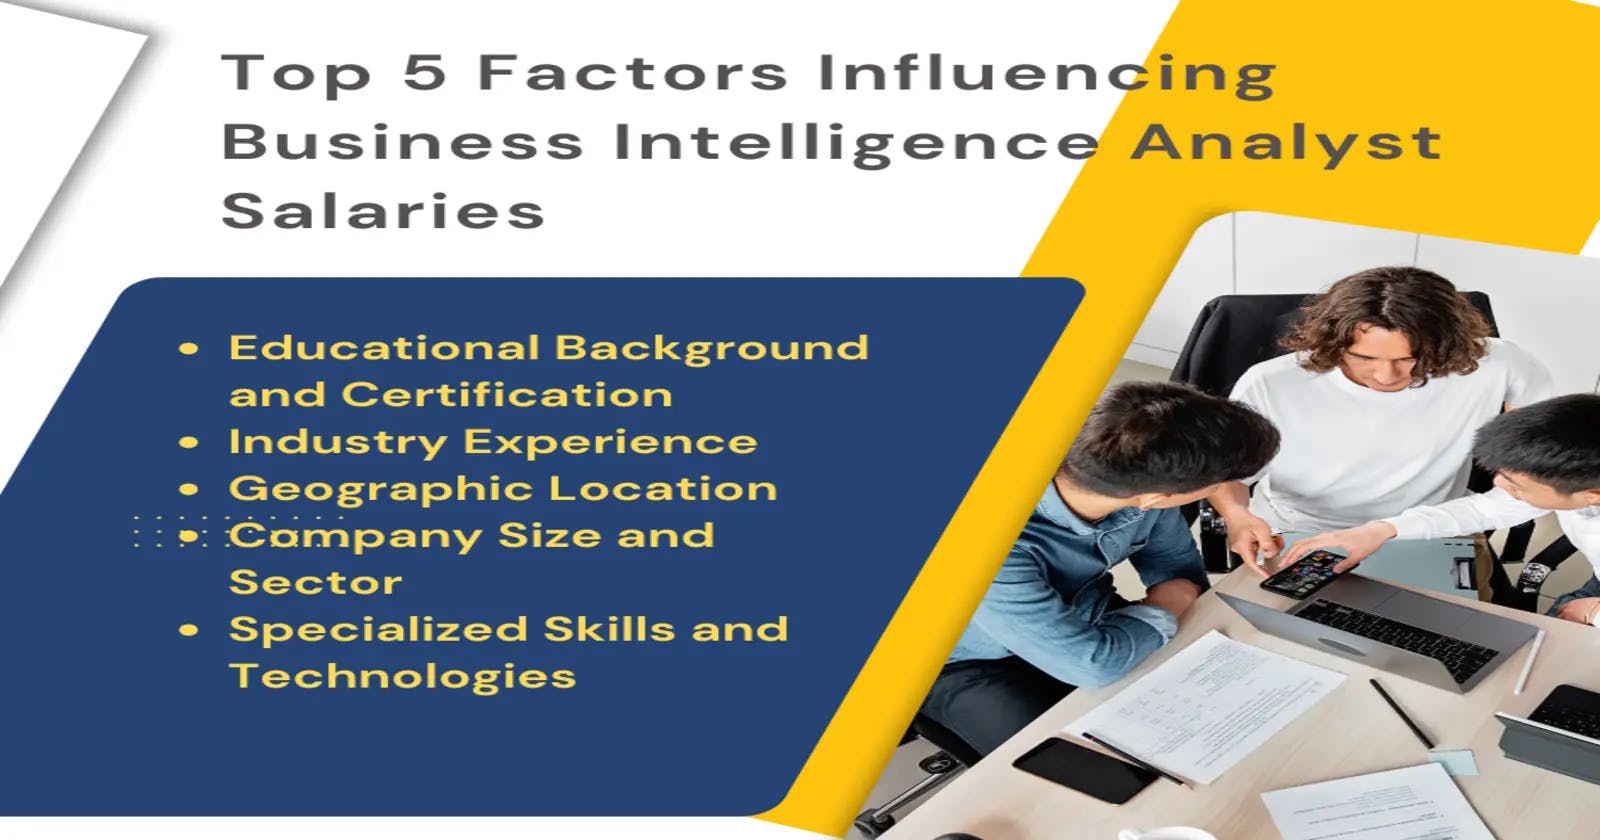 Top 5 Factors Influencing Business Intelligence Analyst Salaries